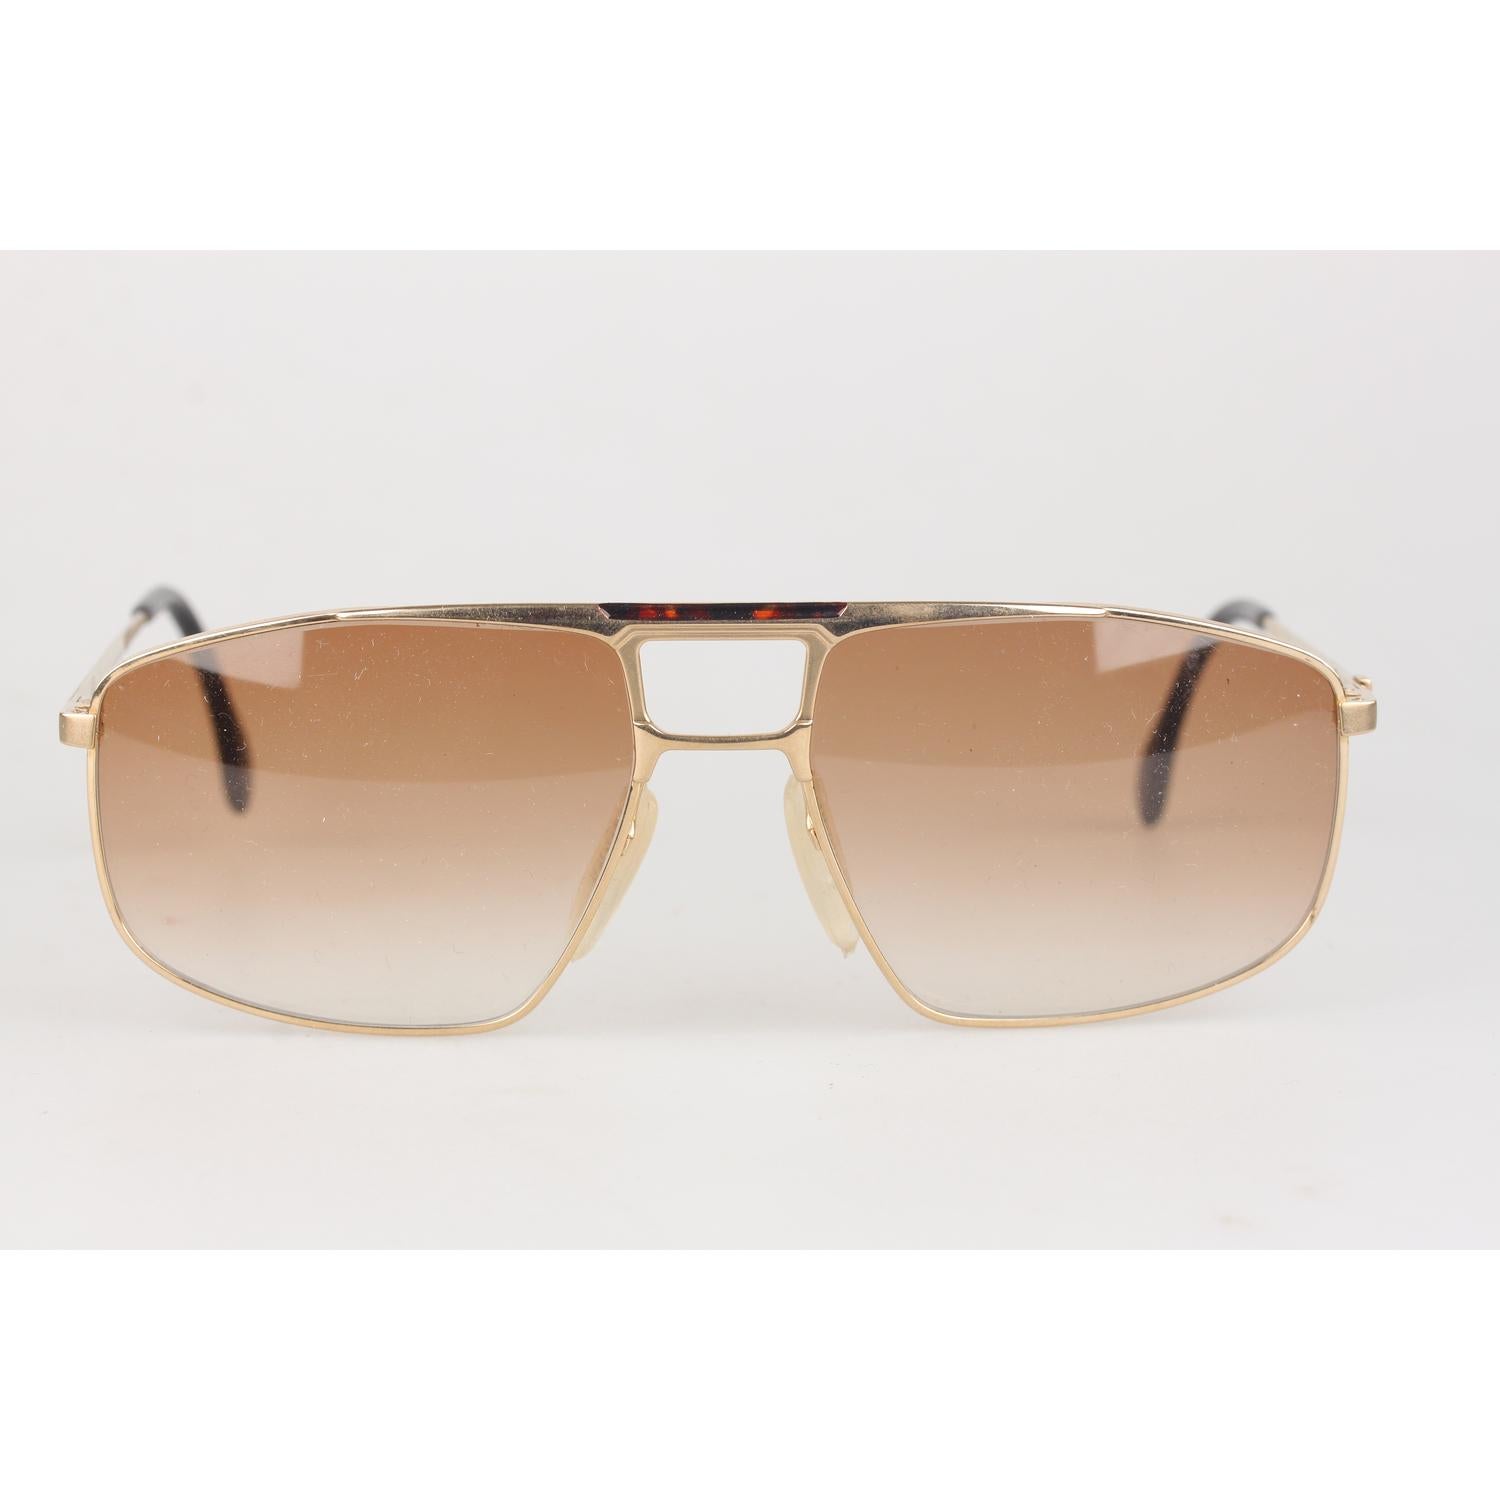 Zeiss Vintage Carat Titanium Gold Mens Sunglasses 5959 New Old Stock 3